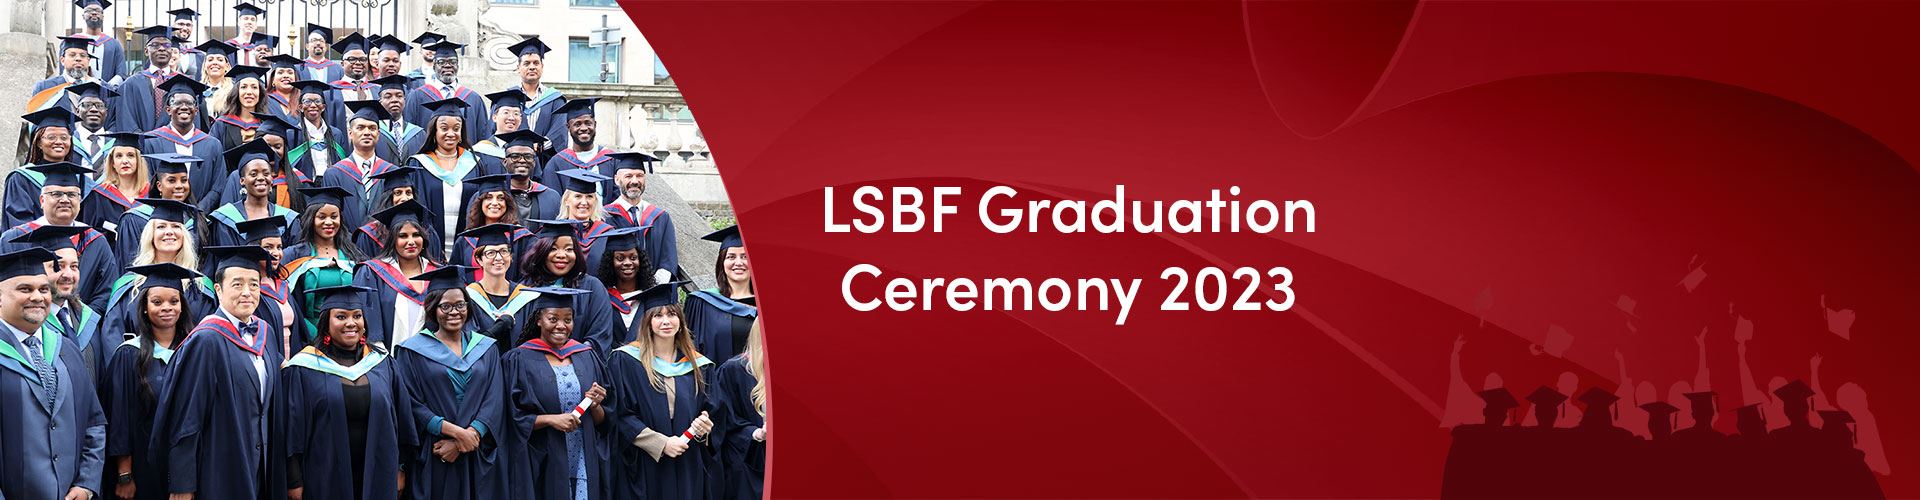 LSBF Graduation Ceremony 2023